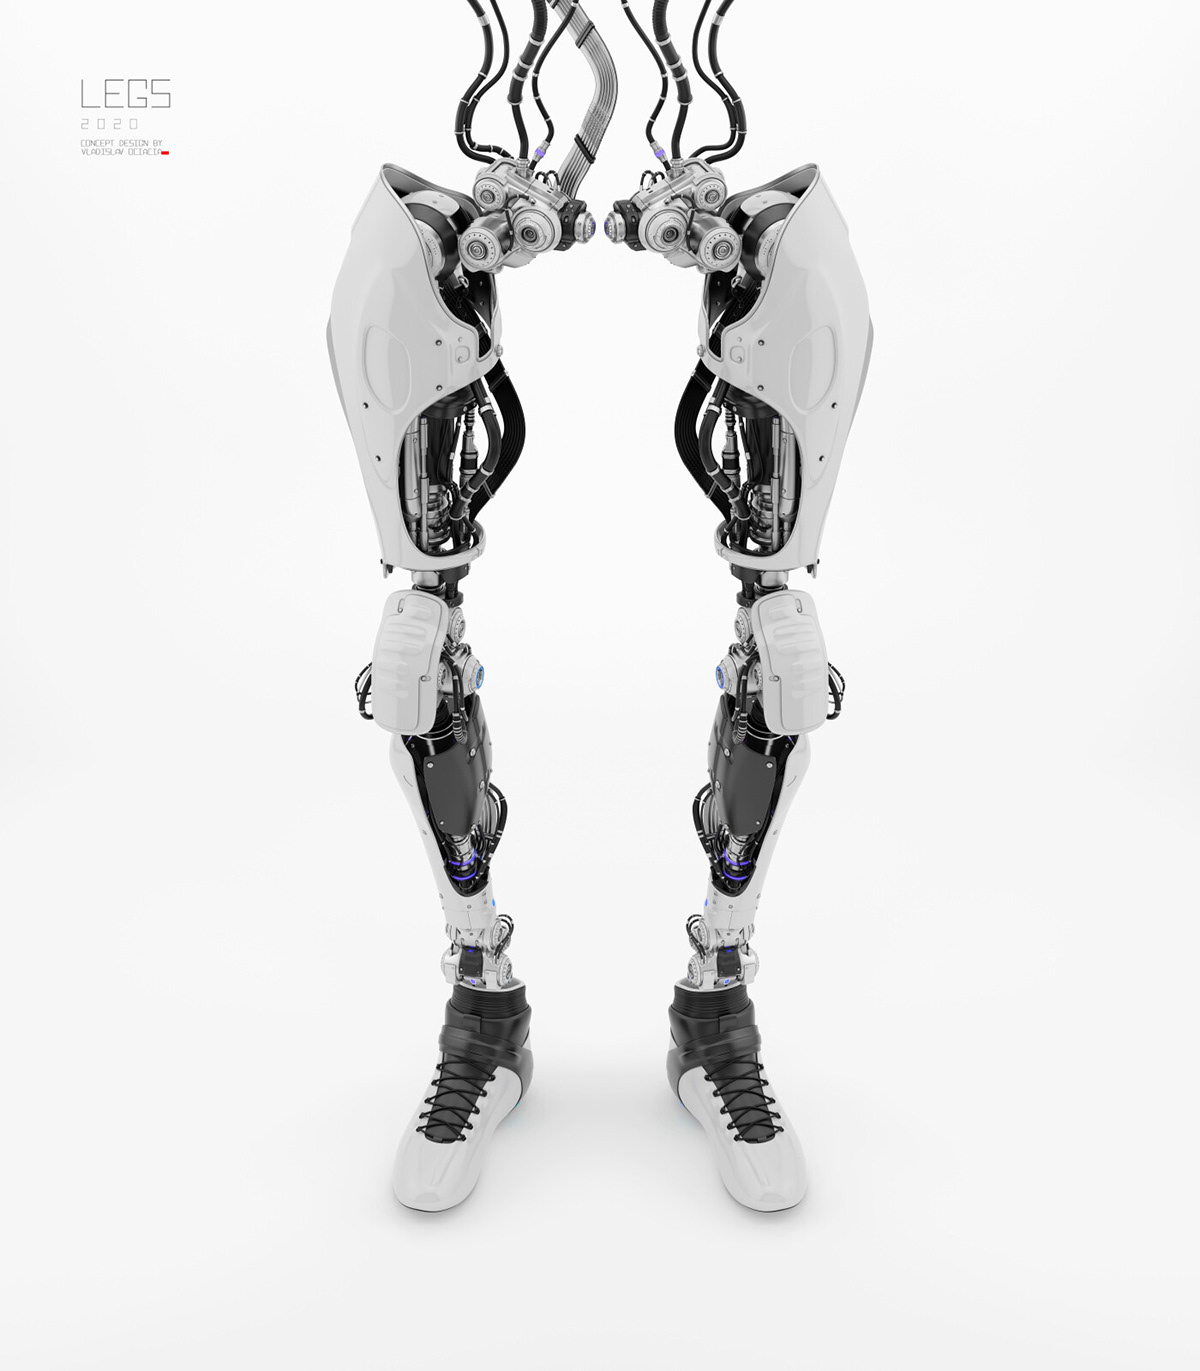 legs超酷的机械腿模型科技感十足